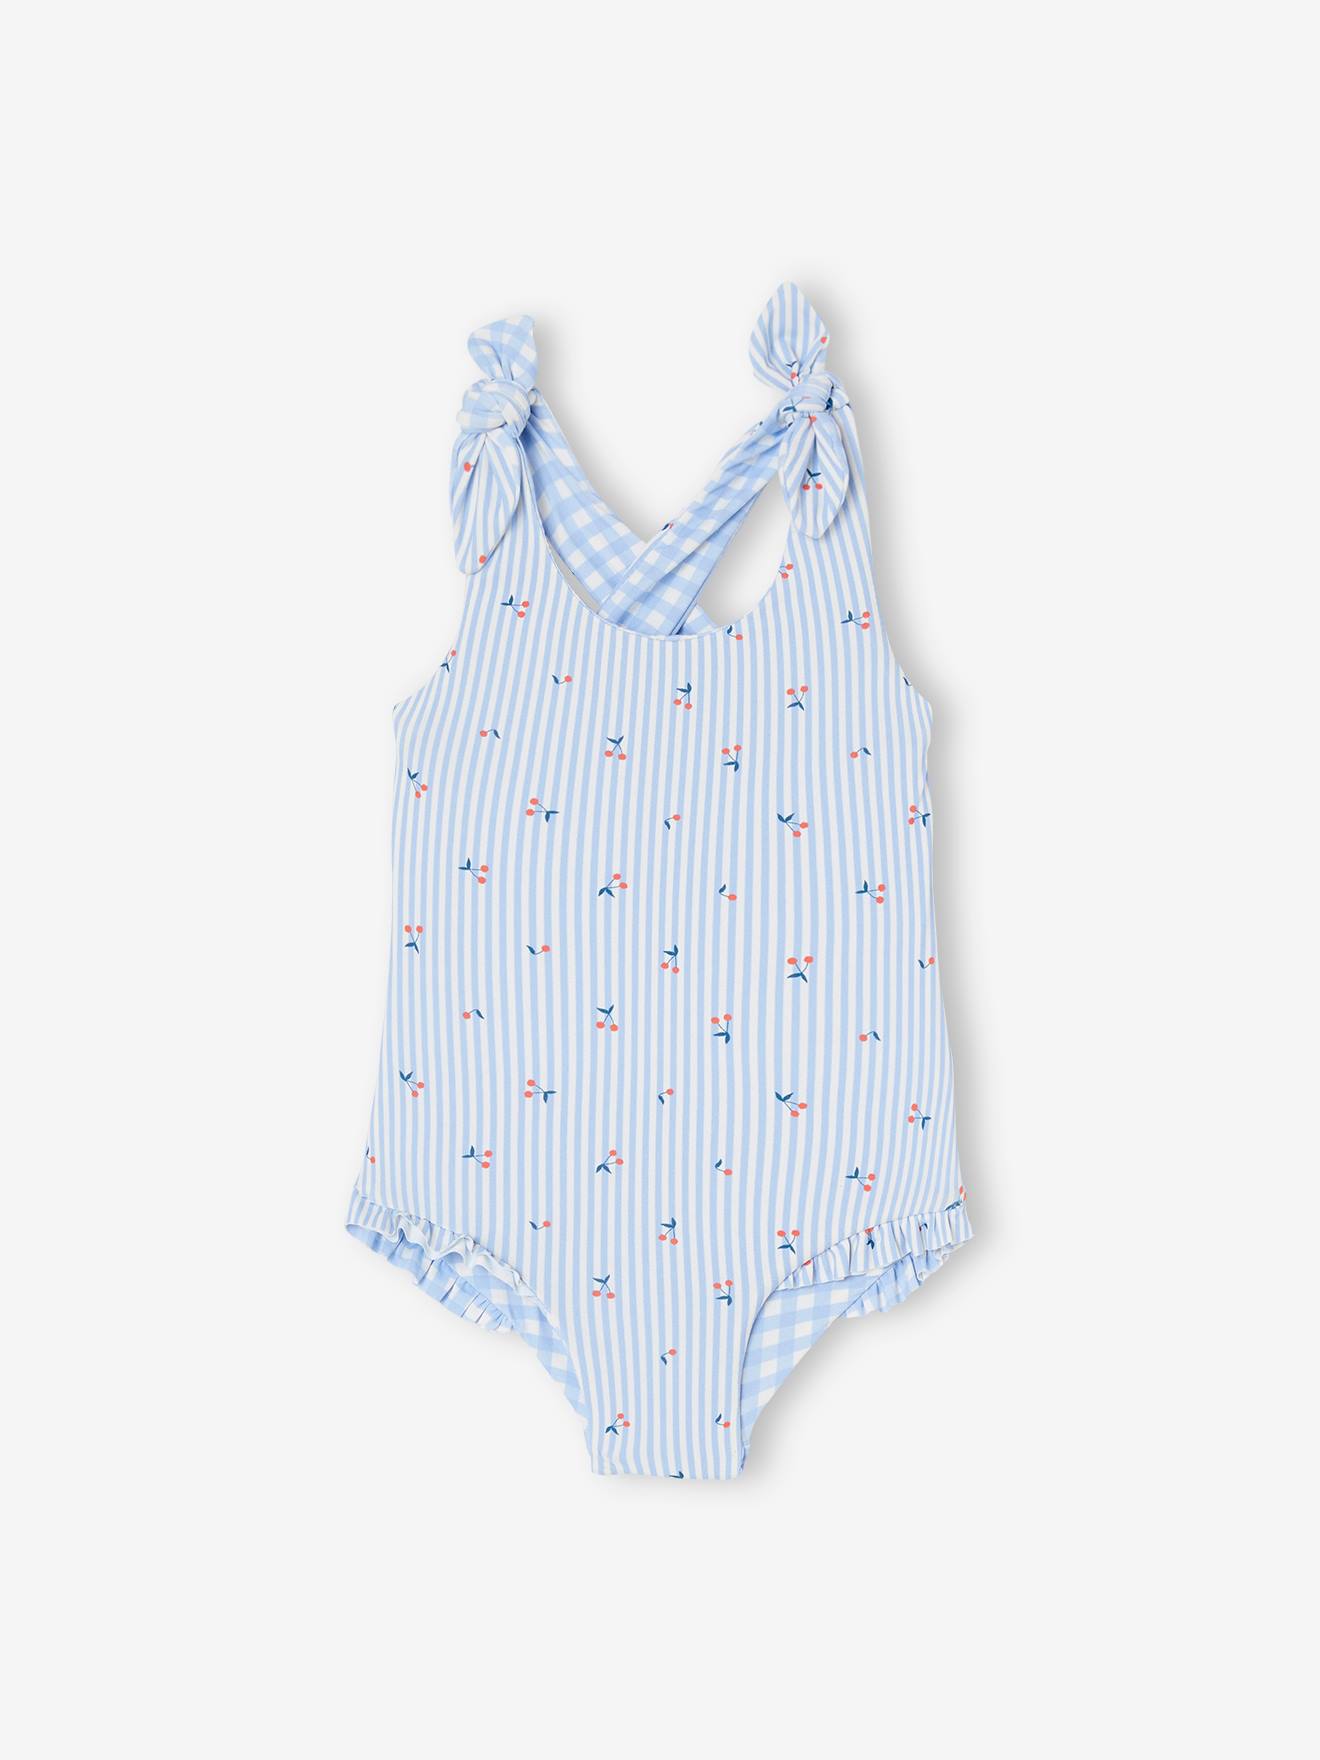 Reversible Swimsuit in Gingham/Stripes & Flowers for Baby Girls sky blue